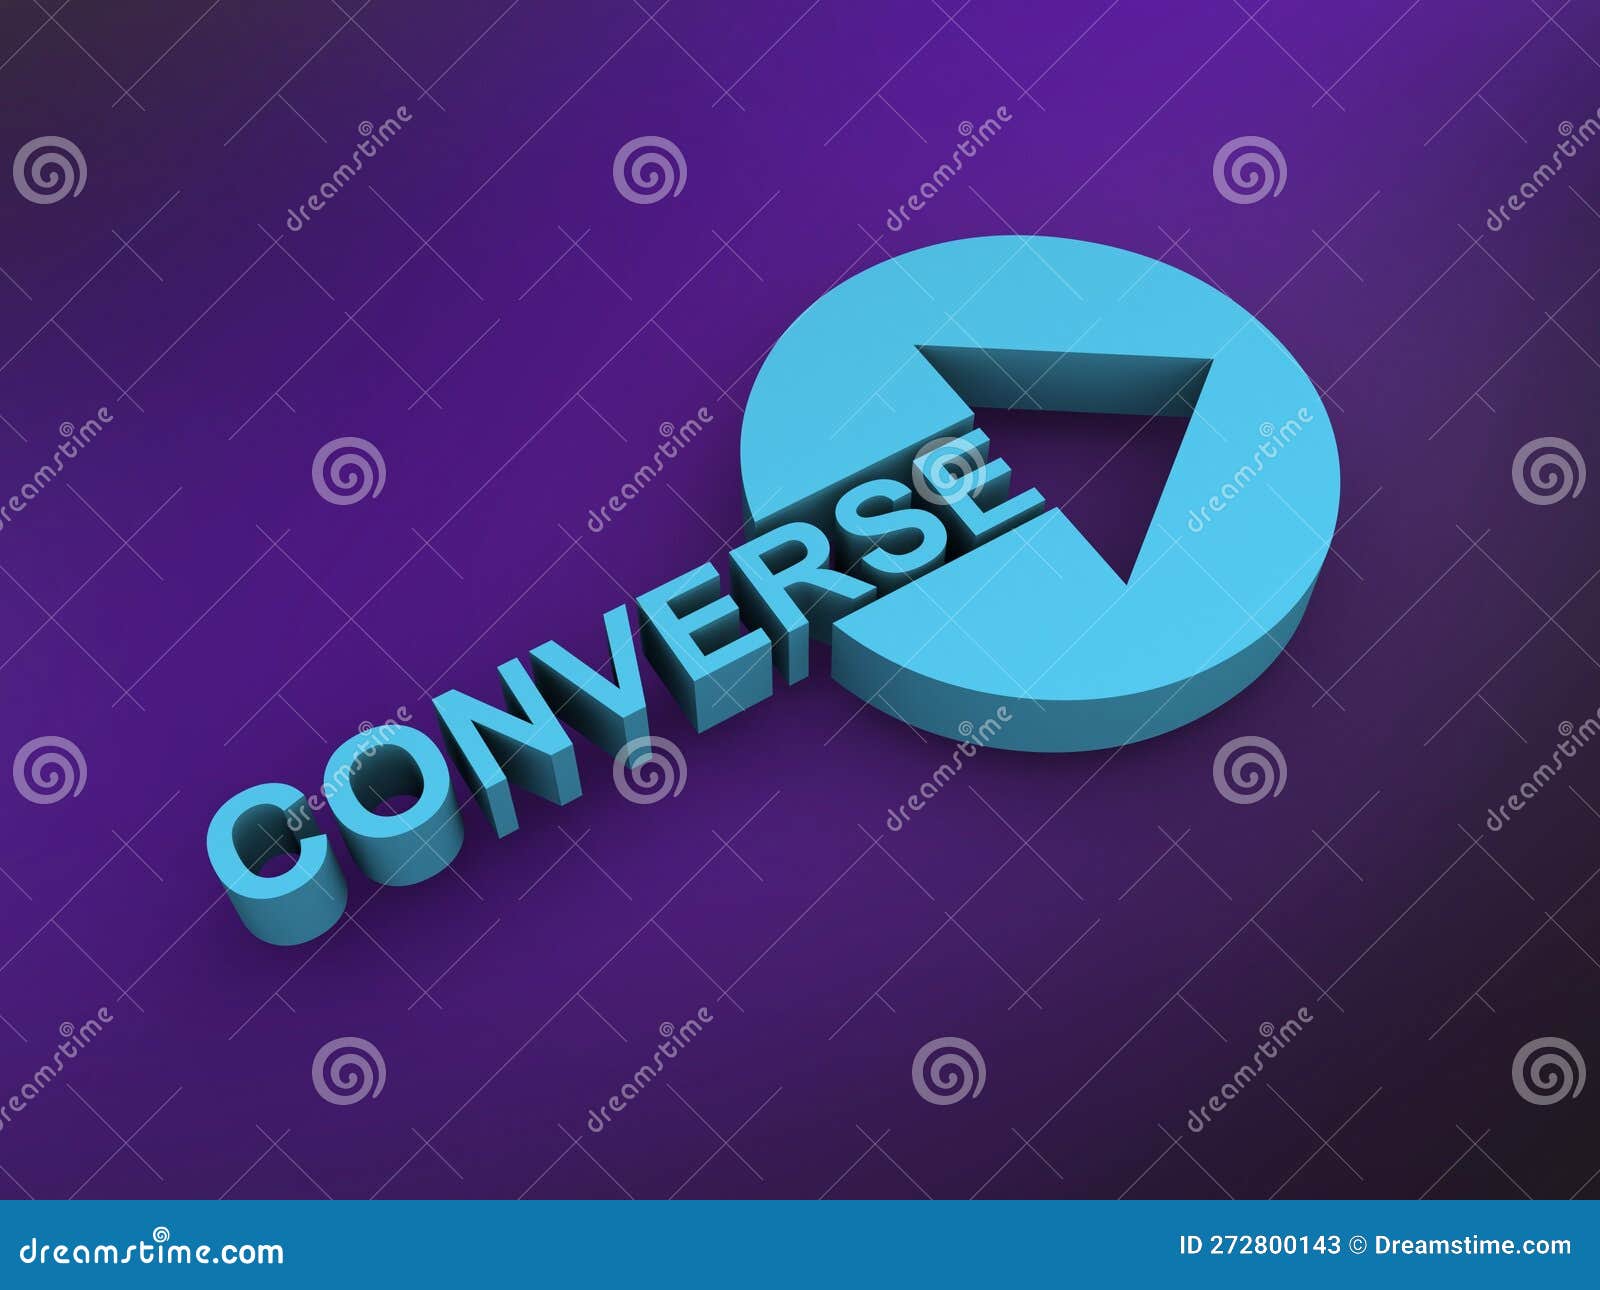 rive ned opbevaring nakke Converse word on purple stock illustration. Illustration of number -  272800143